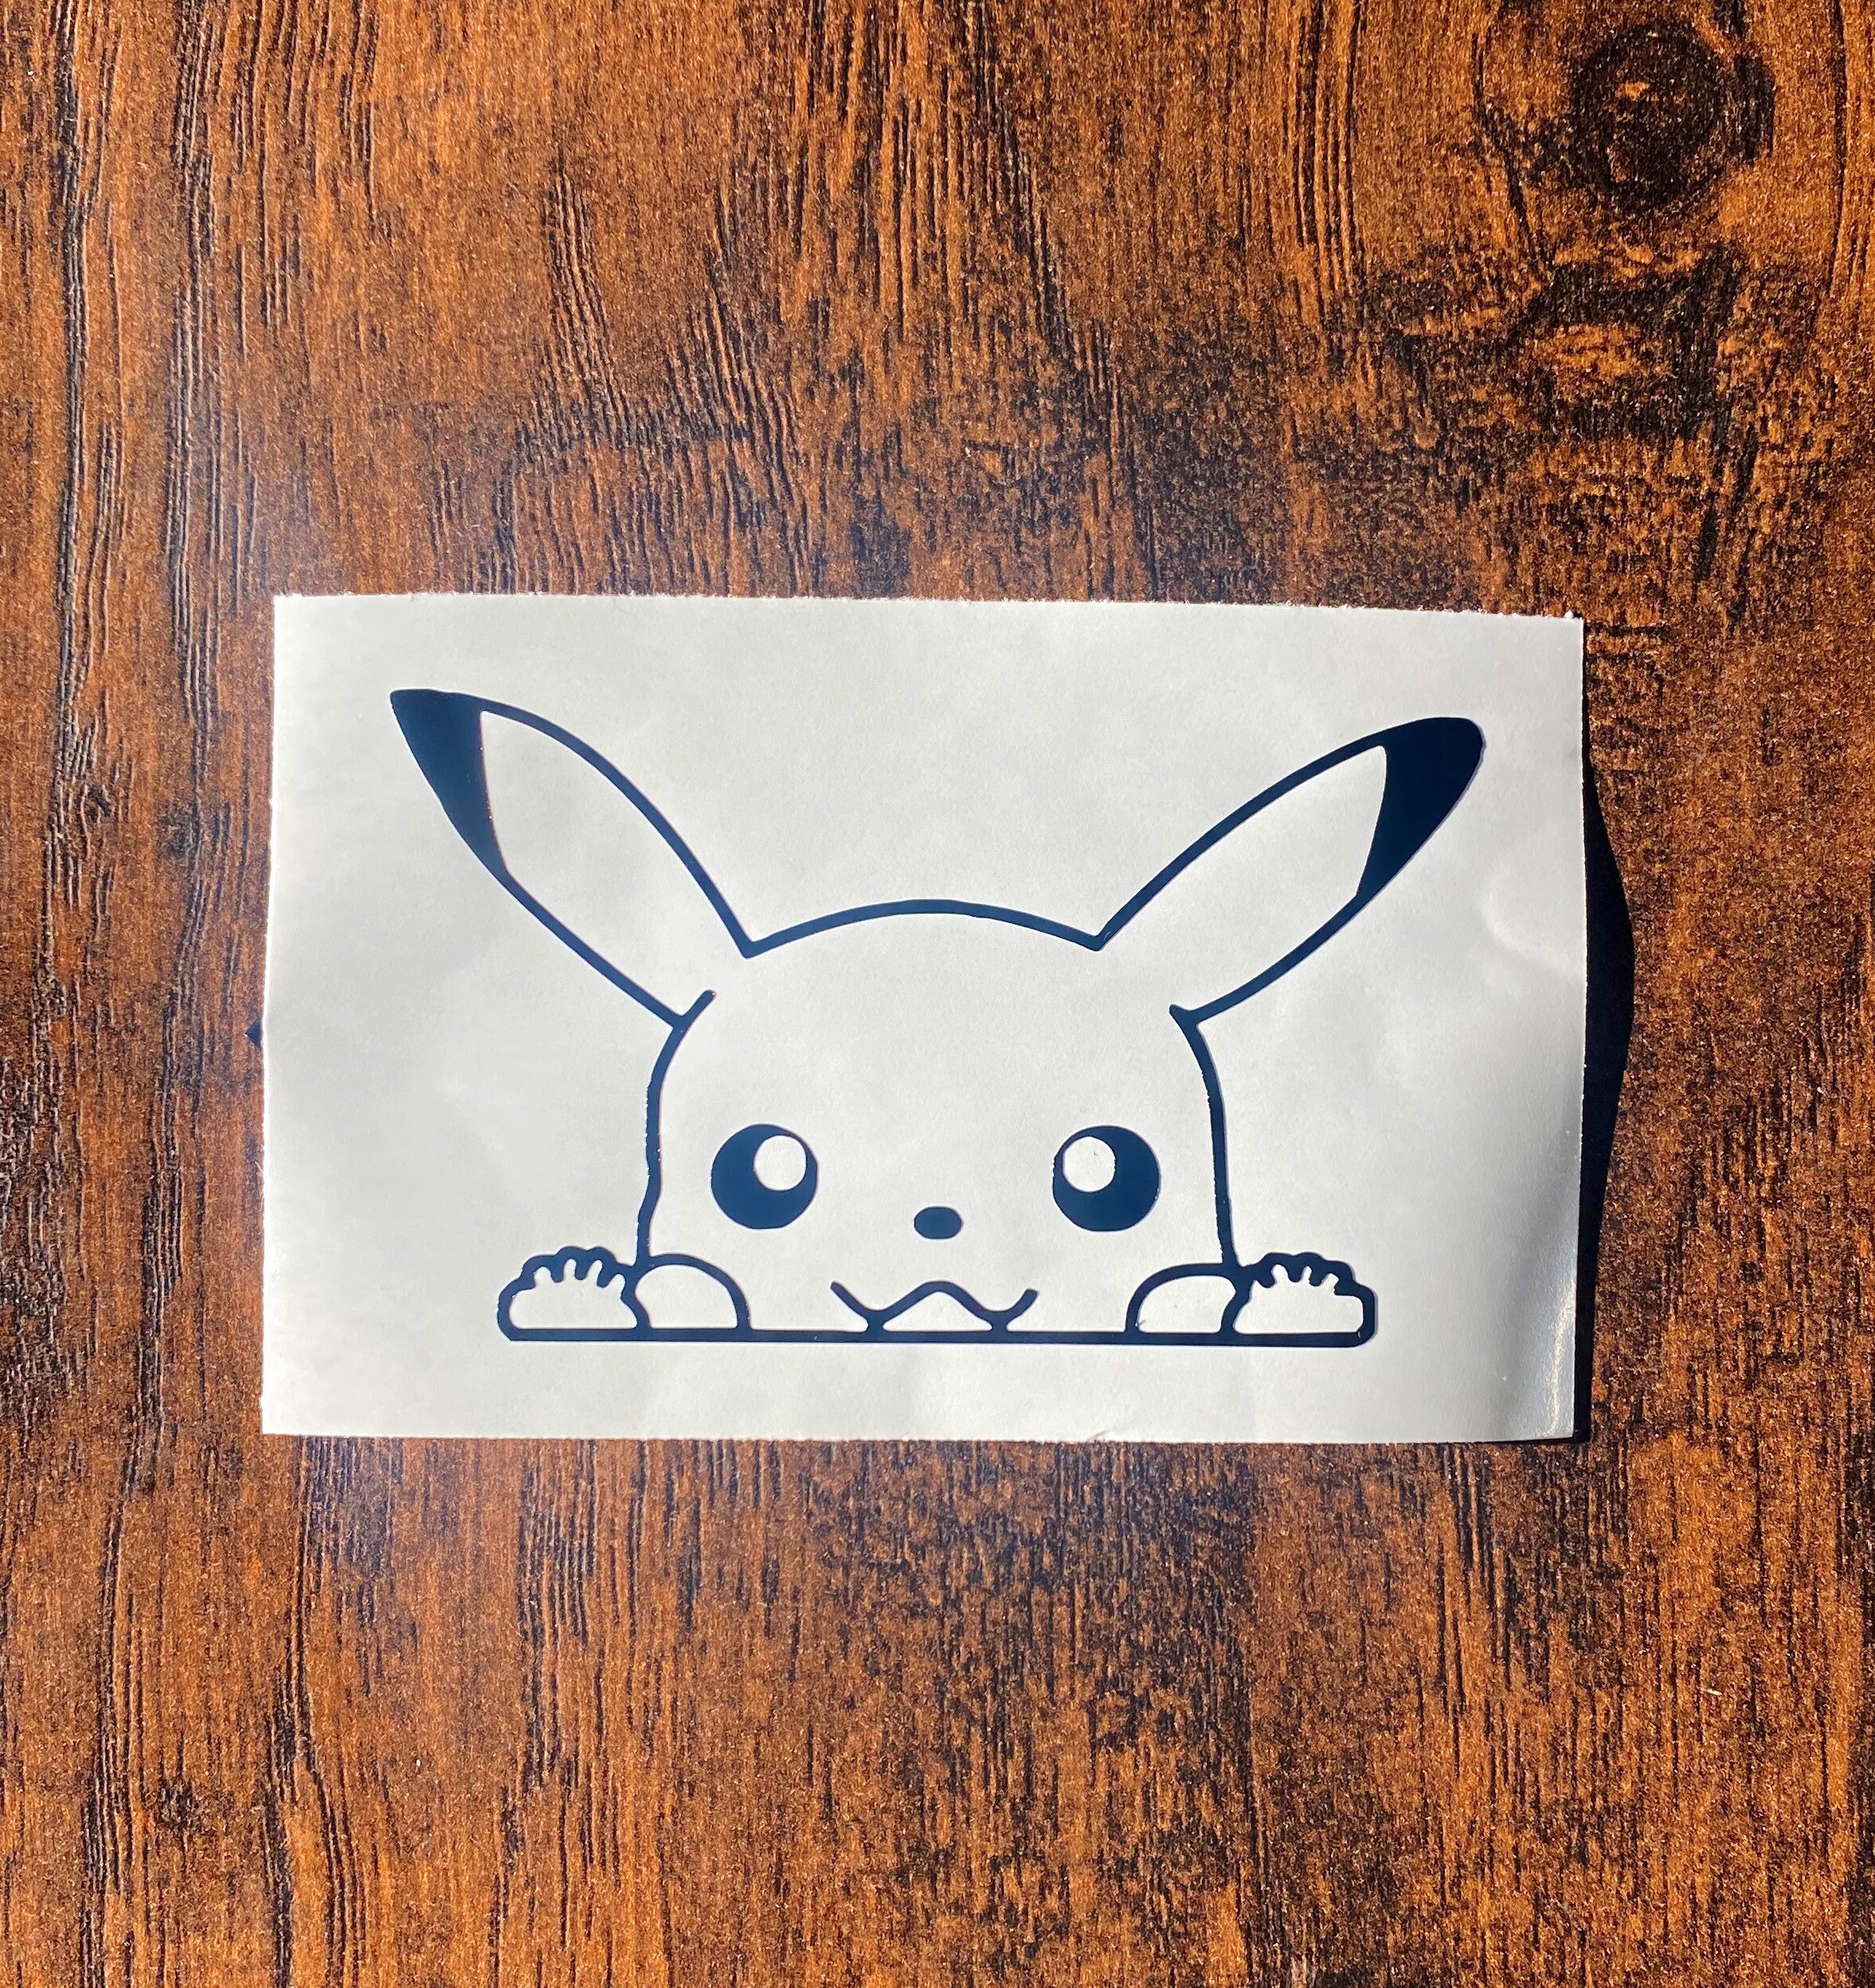 Pikachu Car Dashboard Ornament – MYST AUTO